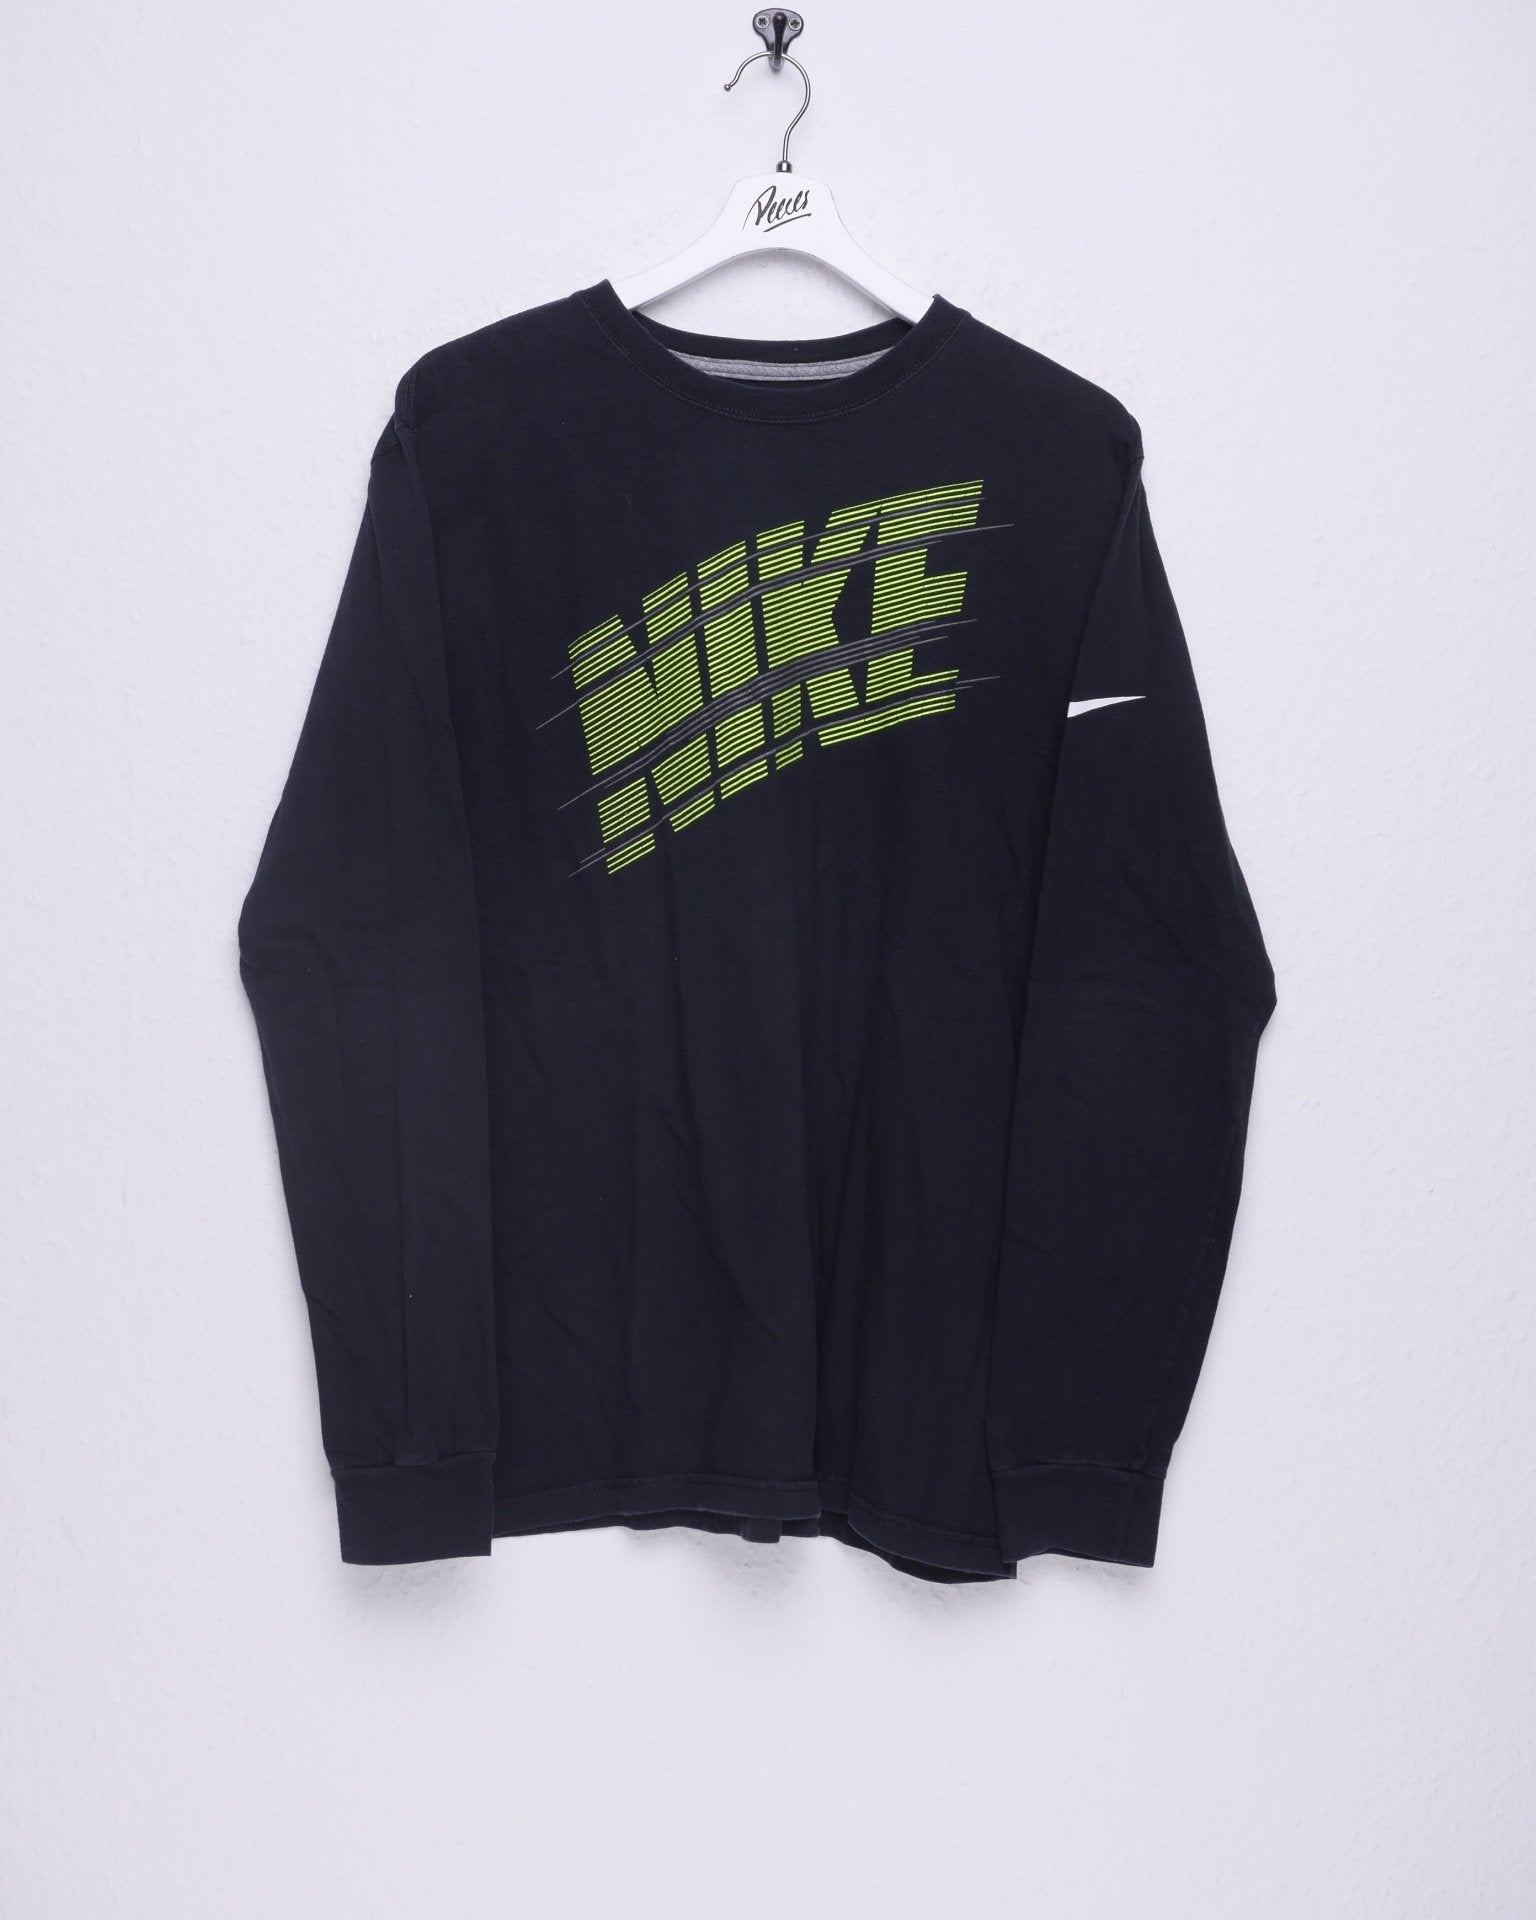 Nike printed Swoosh black L/S Shirt - Peeces